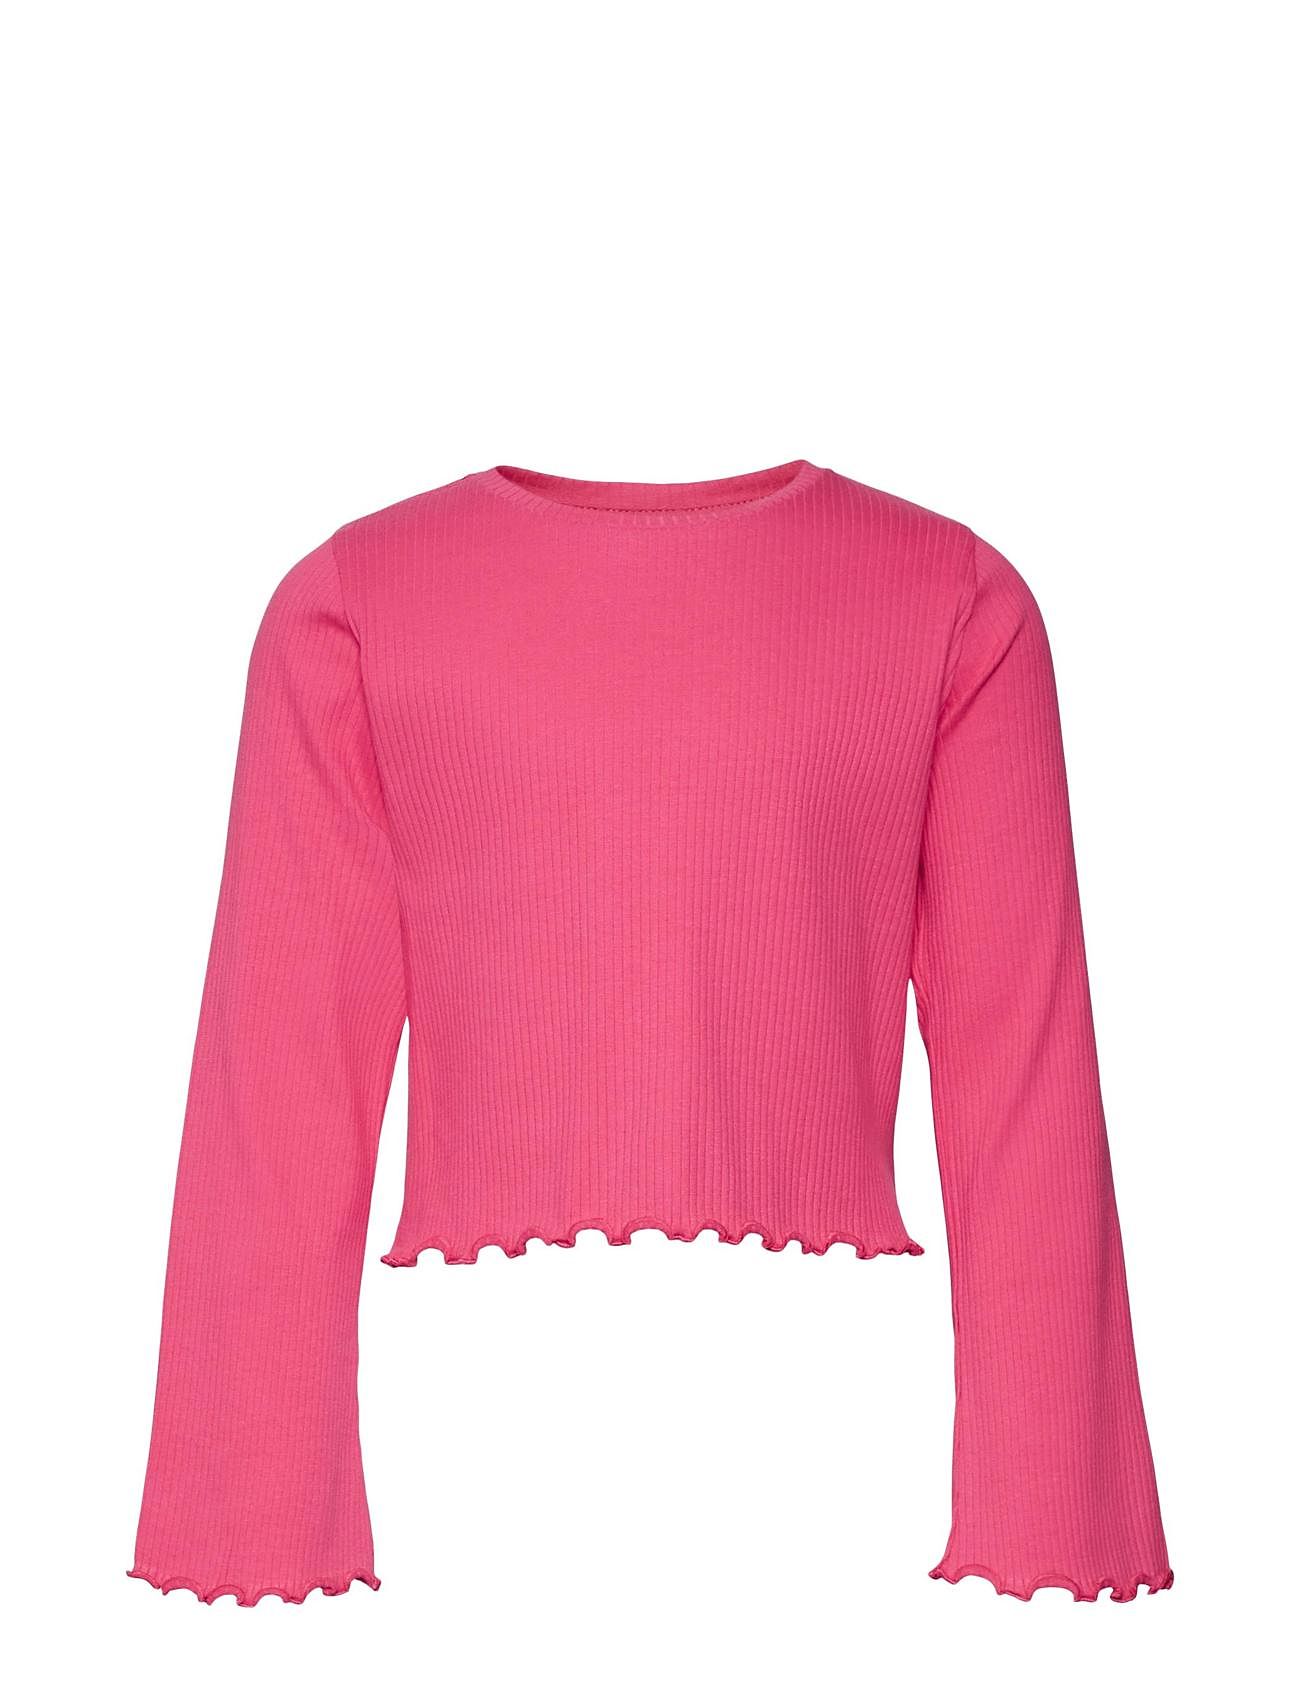 Vmlavender Ls Cropped Top Jrs Girl Tops T-shirts Long-sleeved T-shirts Pink Vero Moda Girl